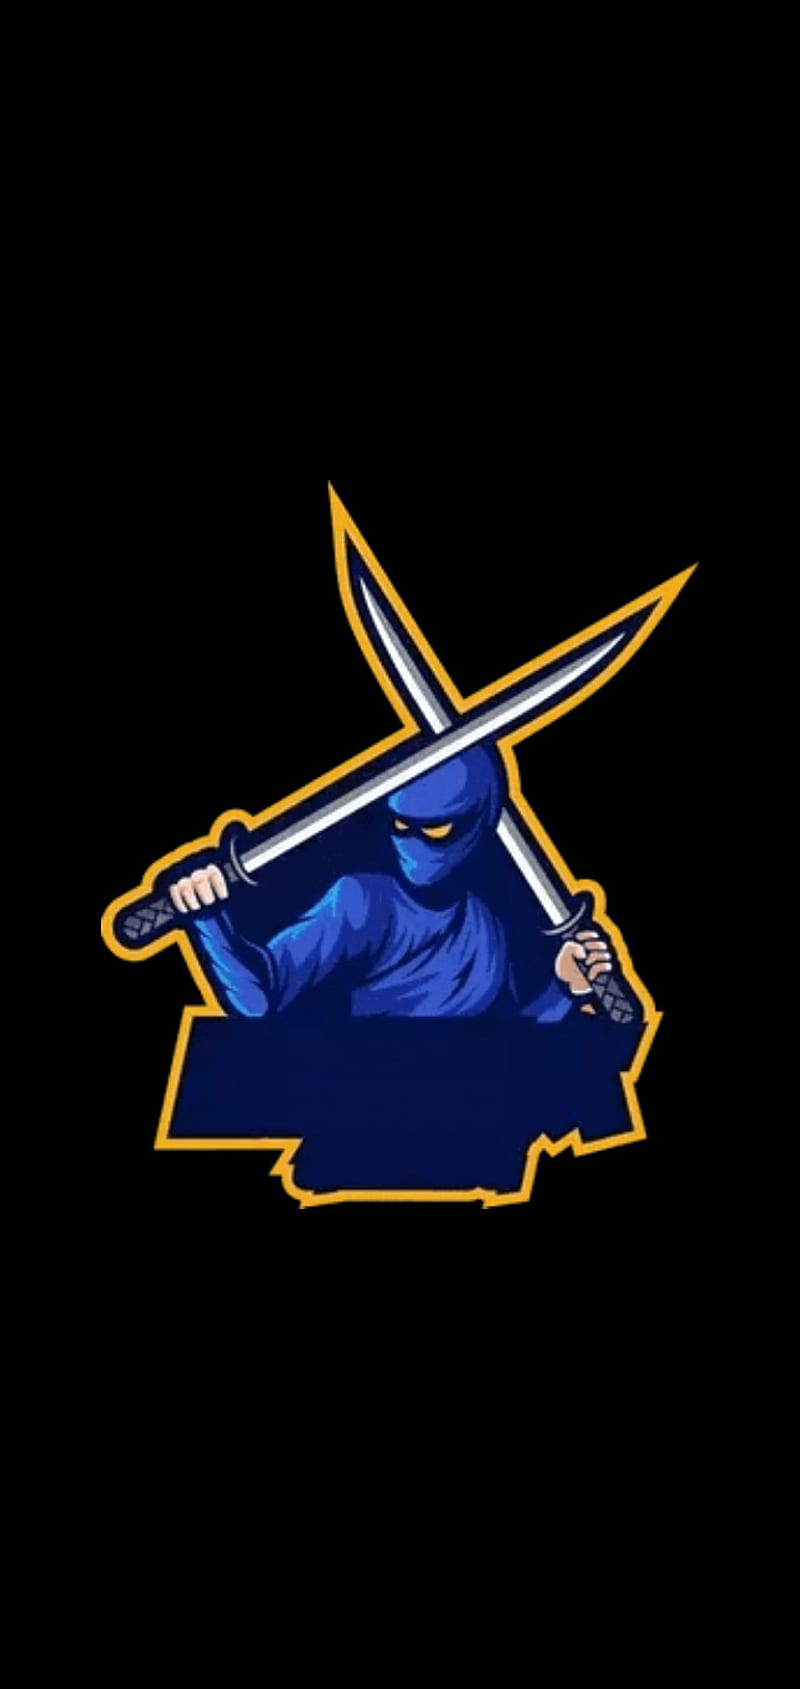 Blue Ninja Gaming With Joystick Logo Icon PNG Transparent